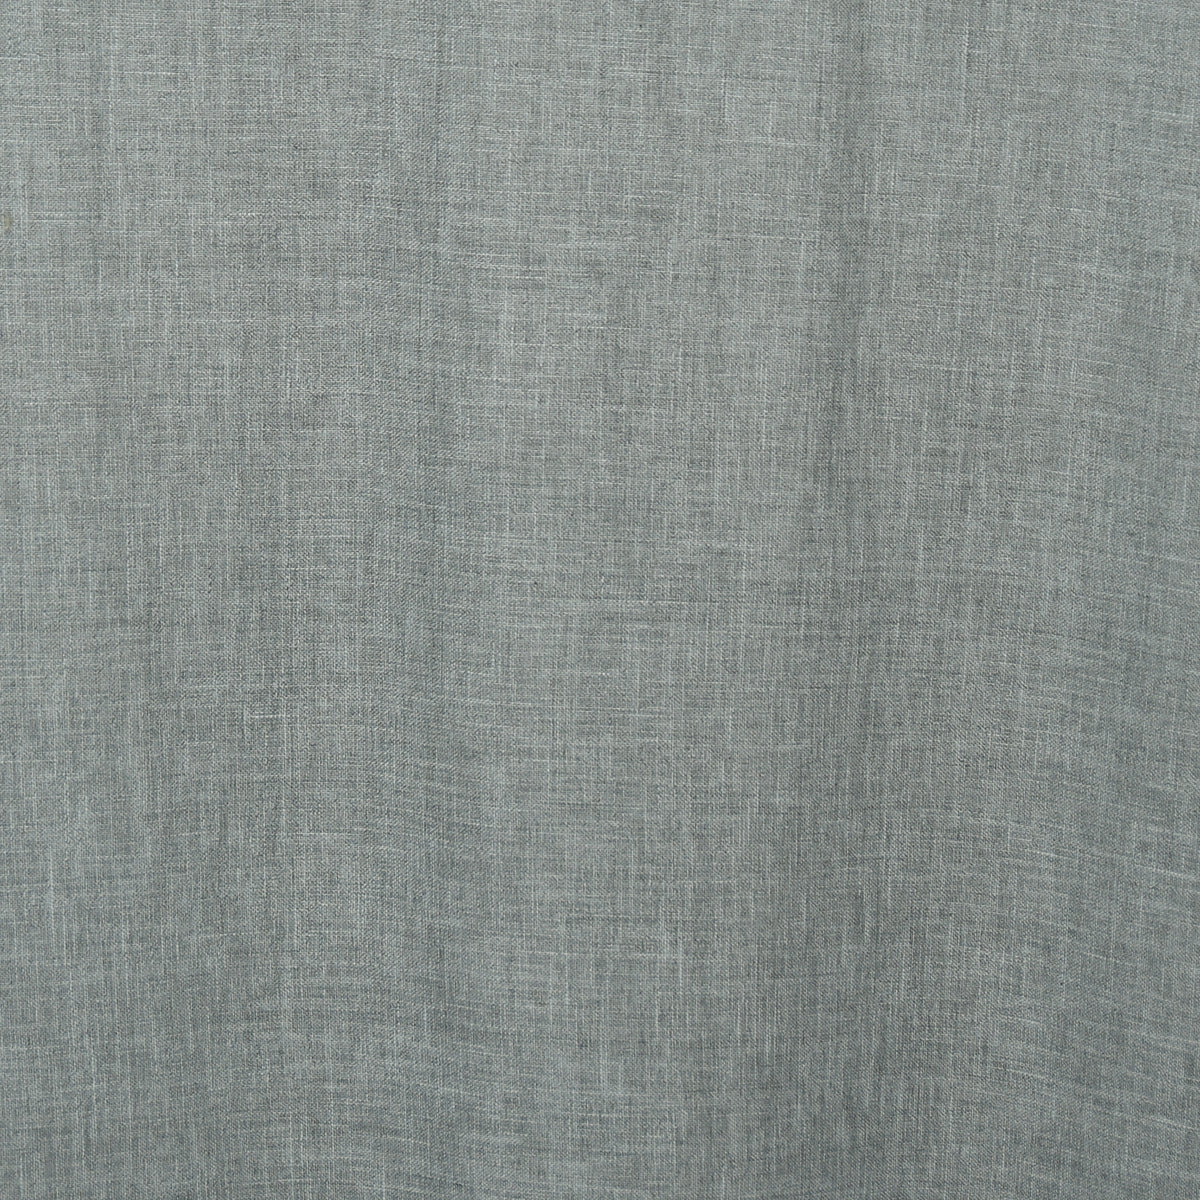 Day curtain gray blue Vliet